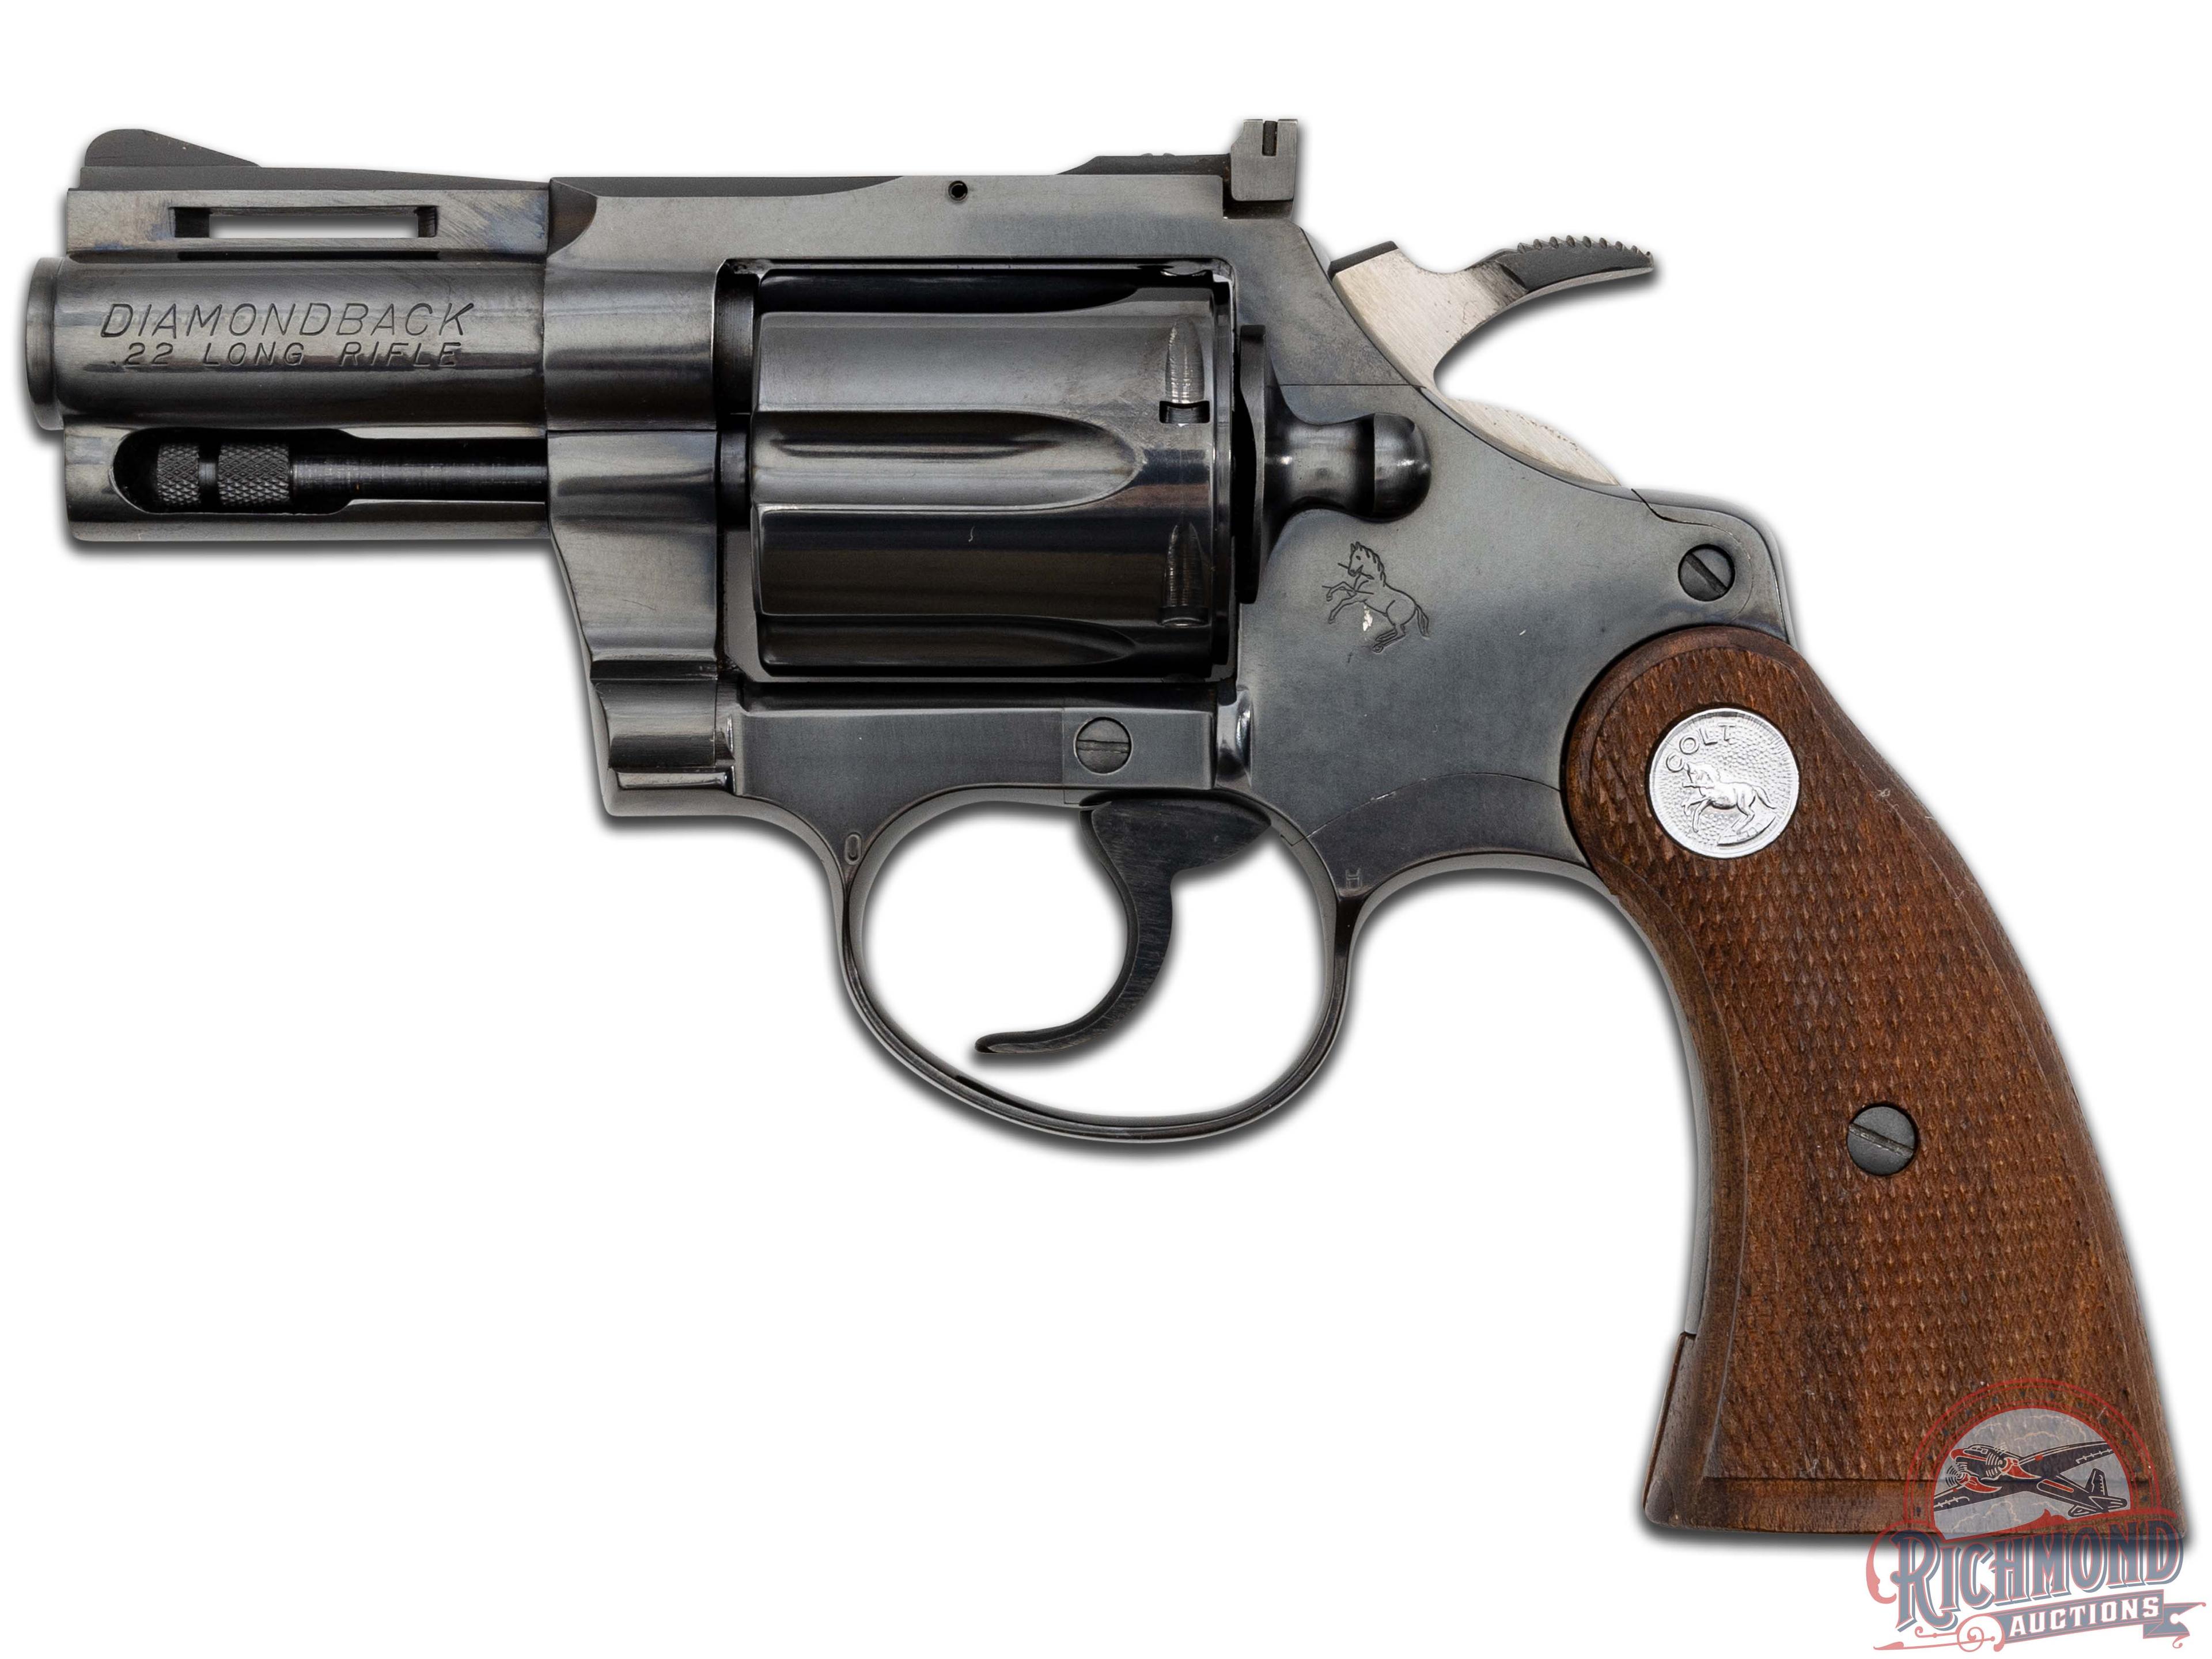 Stunning 1969 Colt Diamondback 2.5" Blued .22 LR Double Action Revolver in Original Box